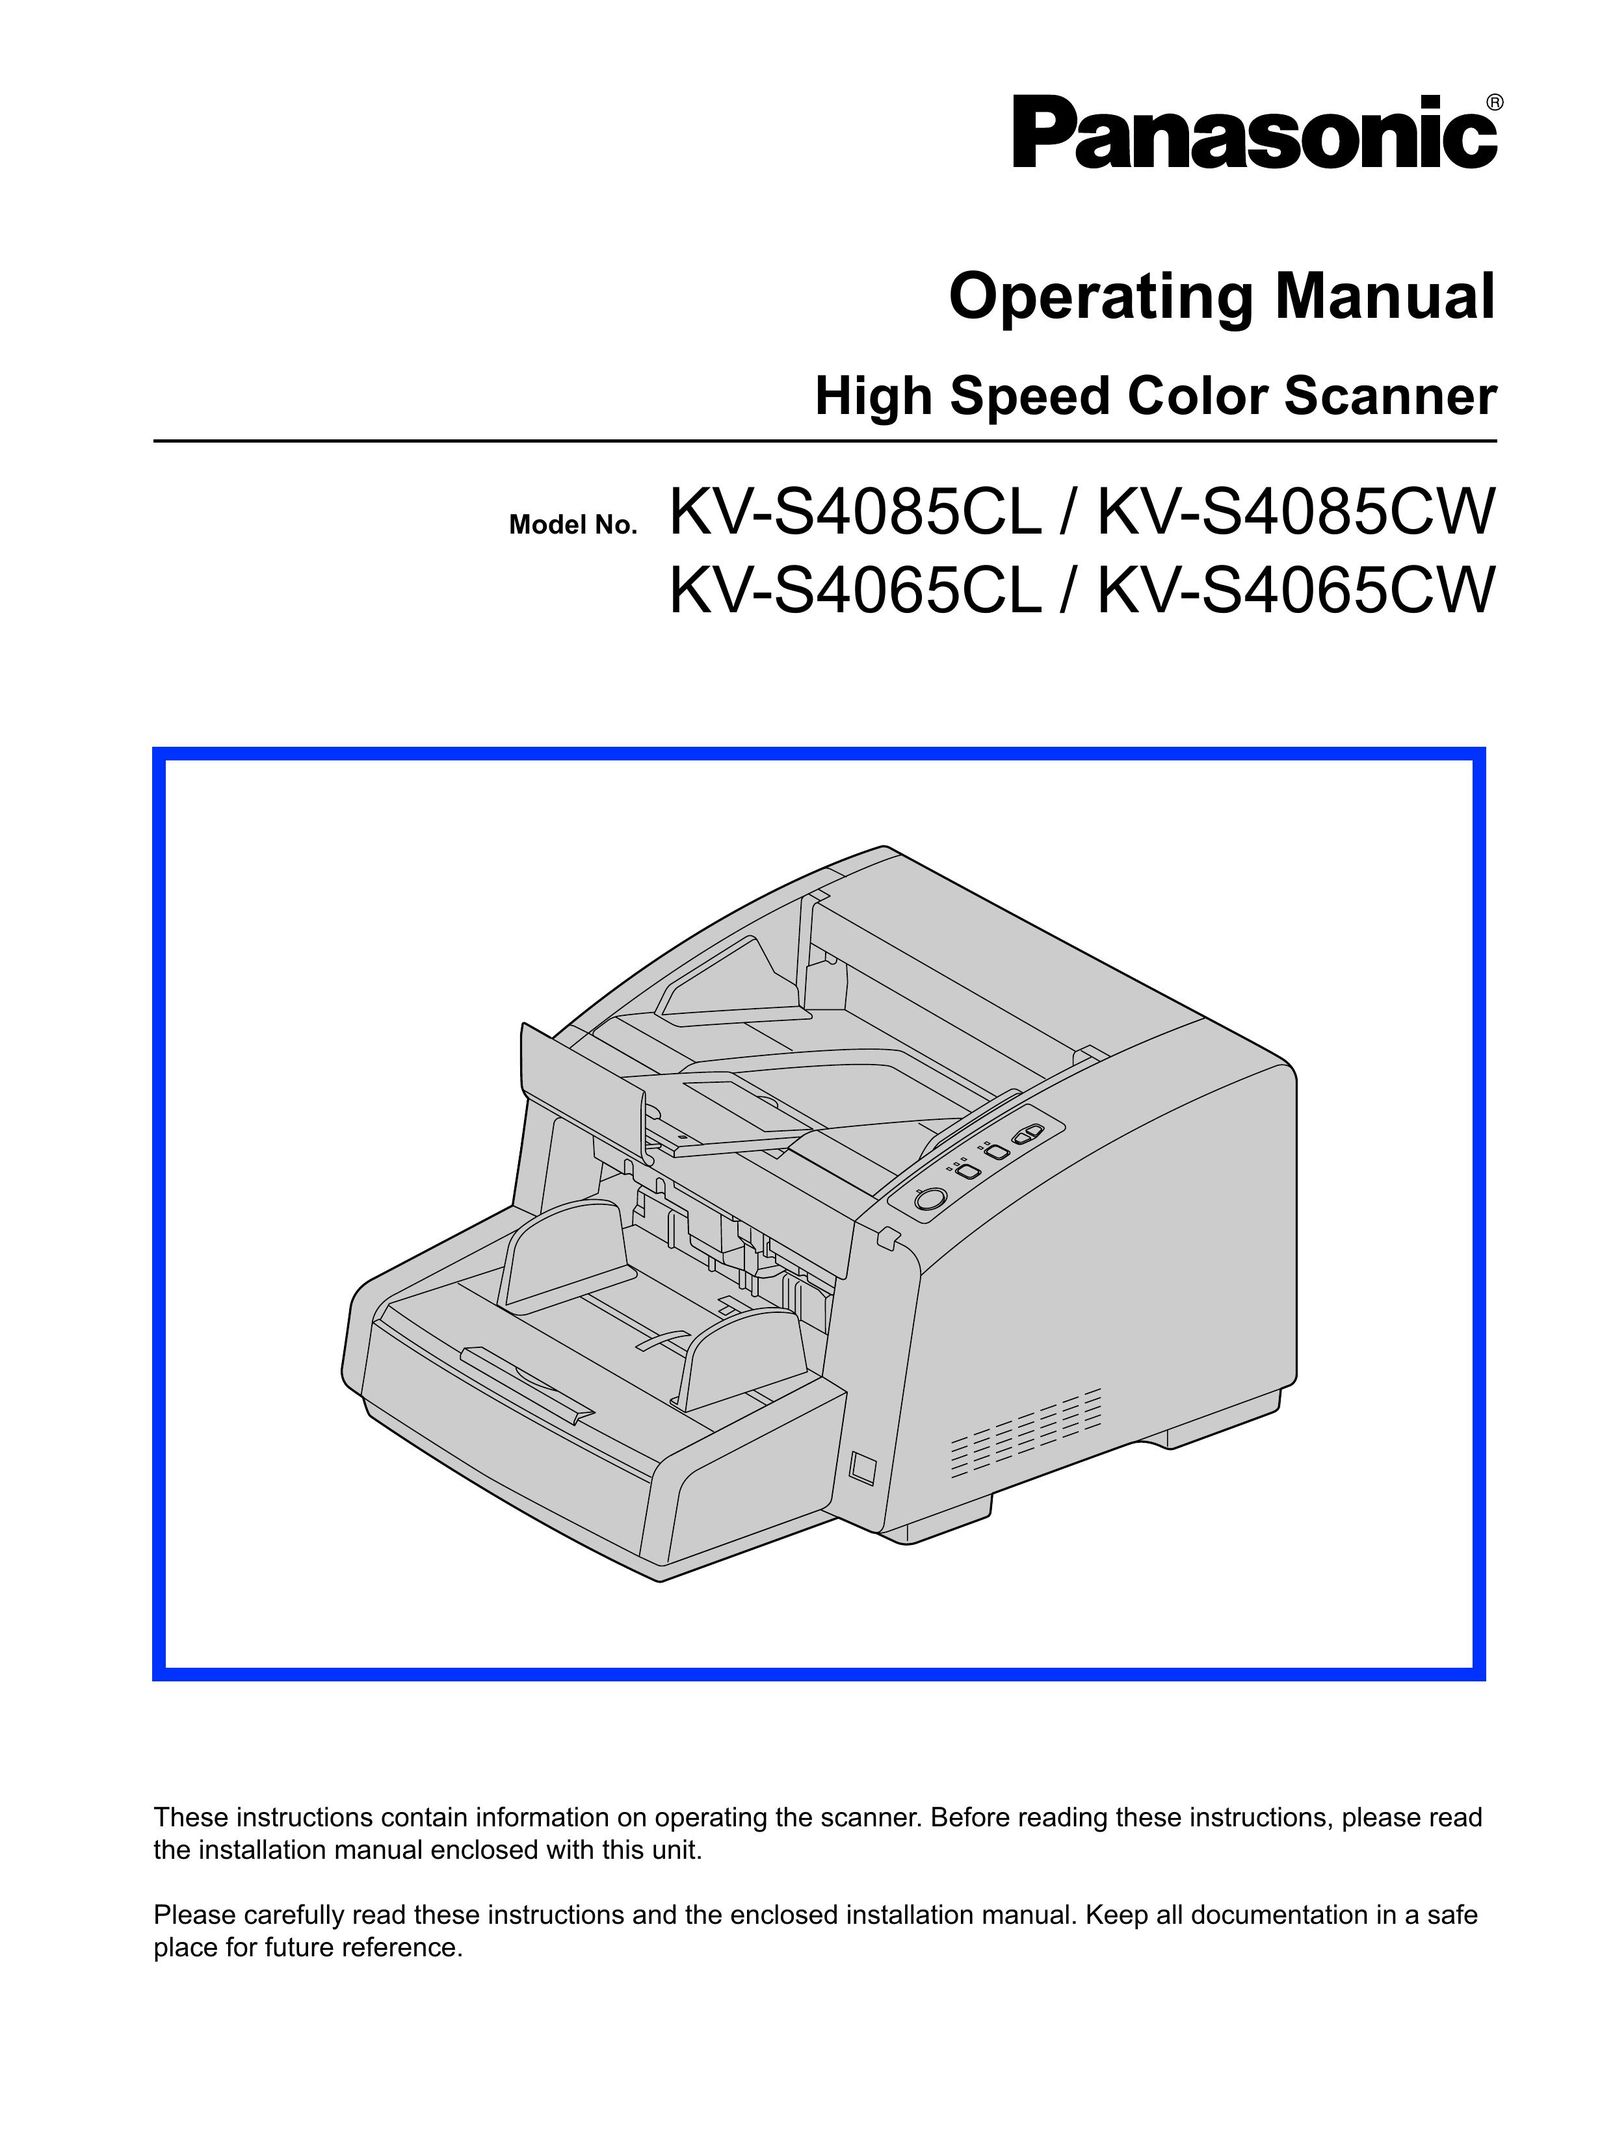 Panasonic KV-S4065CL Scanner User Manual